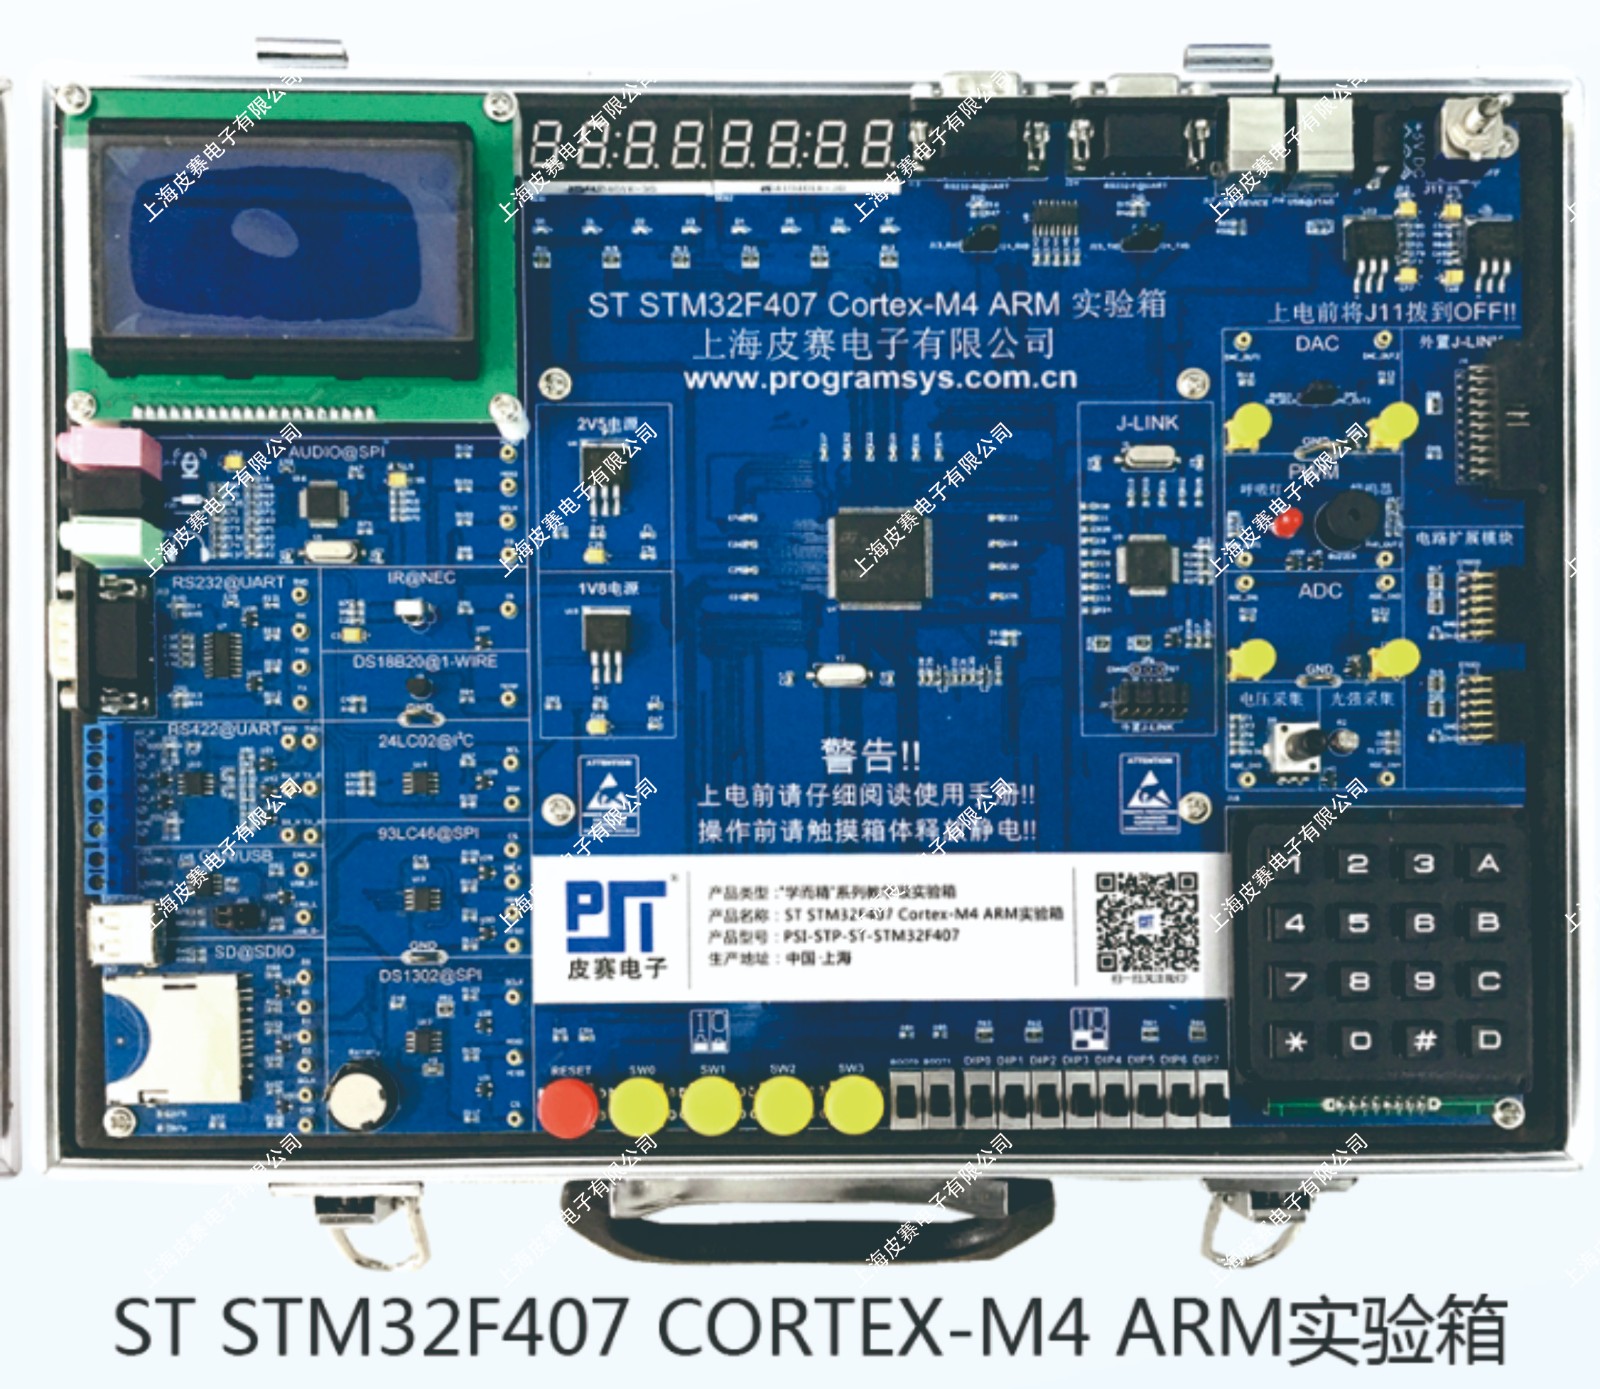 ST STM32F407 CORTEX-M4 ARM实验箱